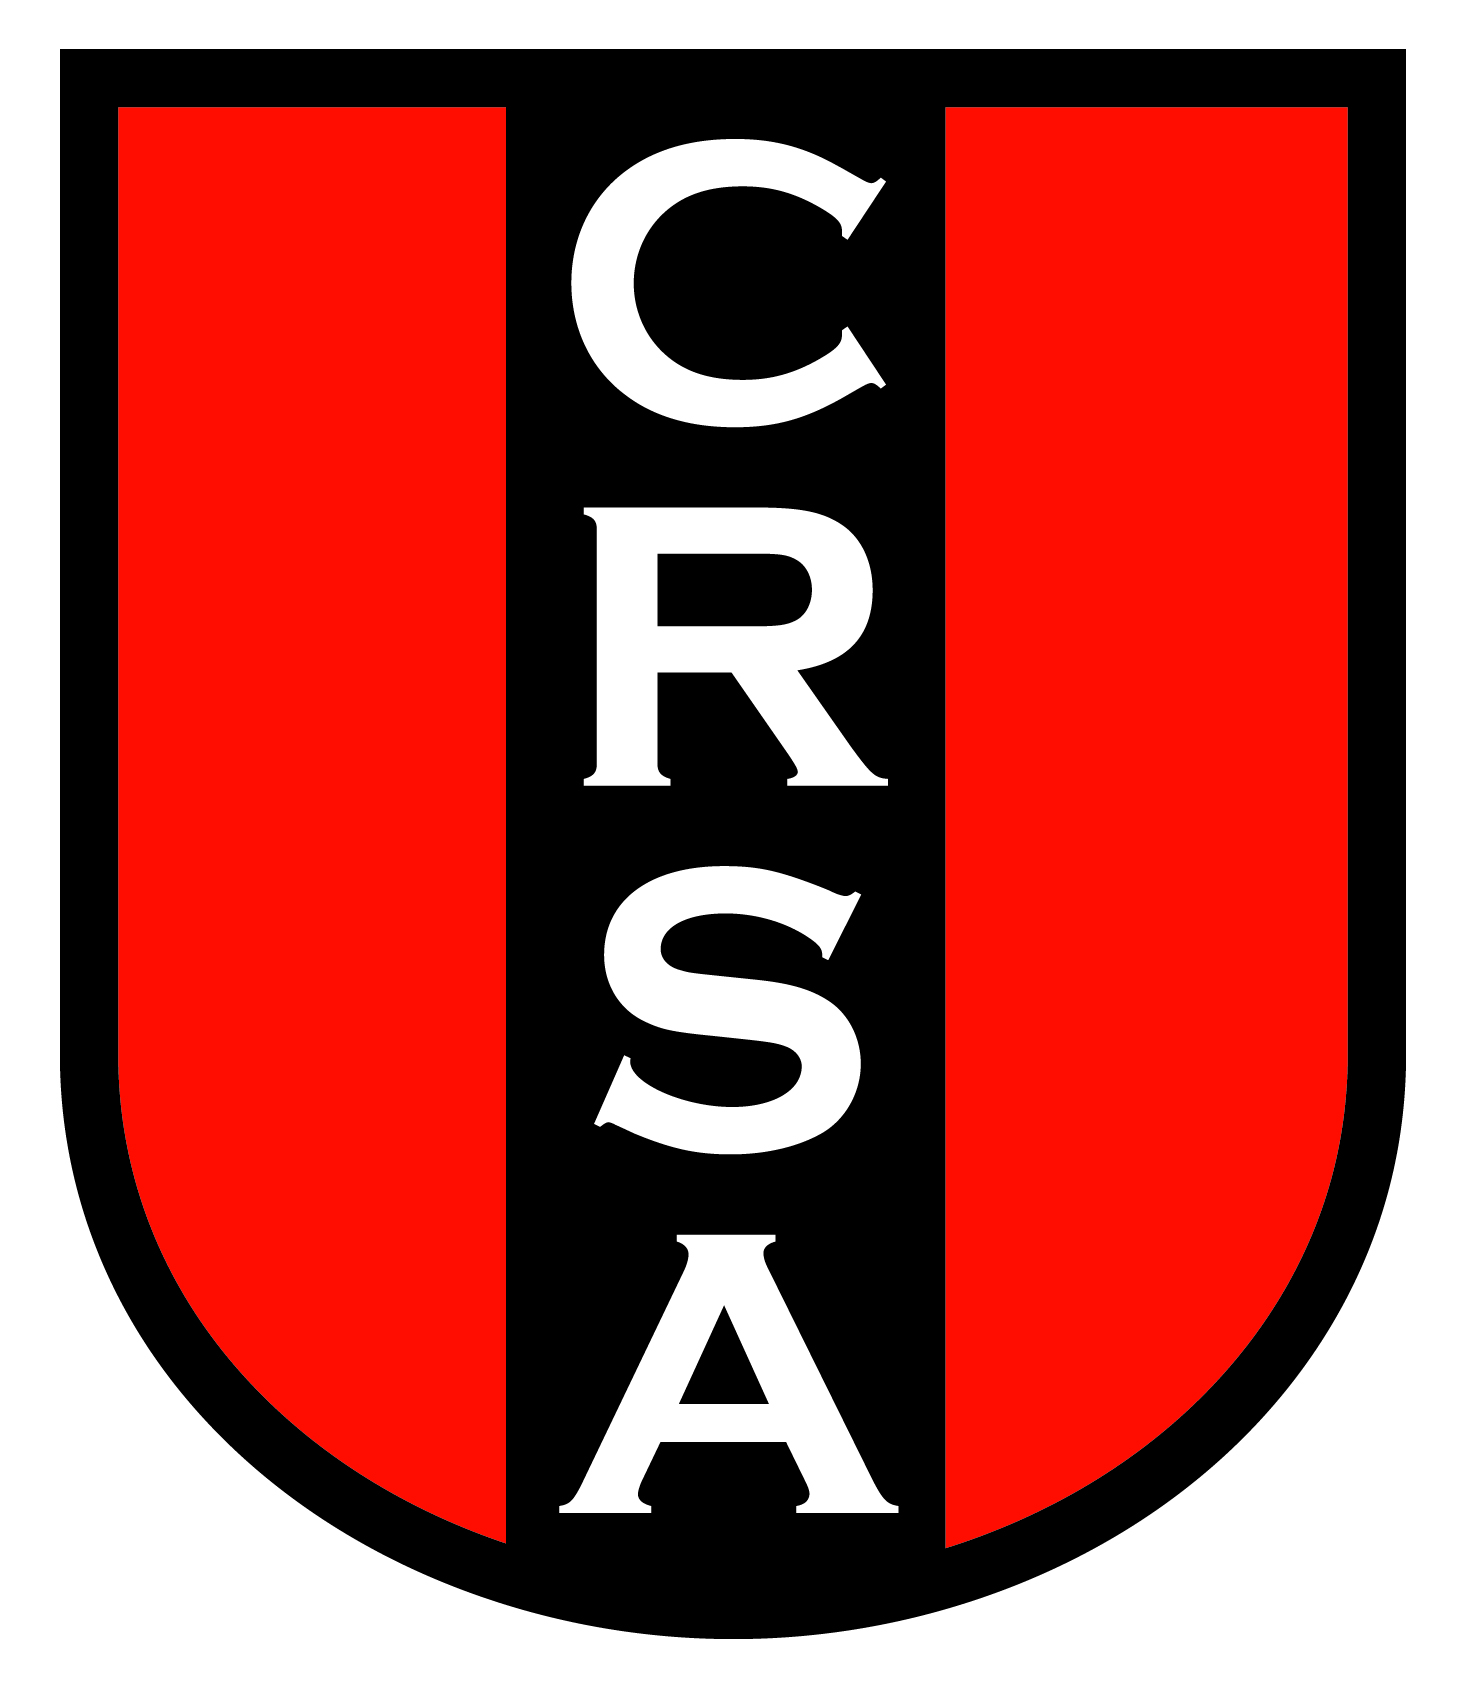 Cedar River SA team badge